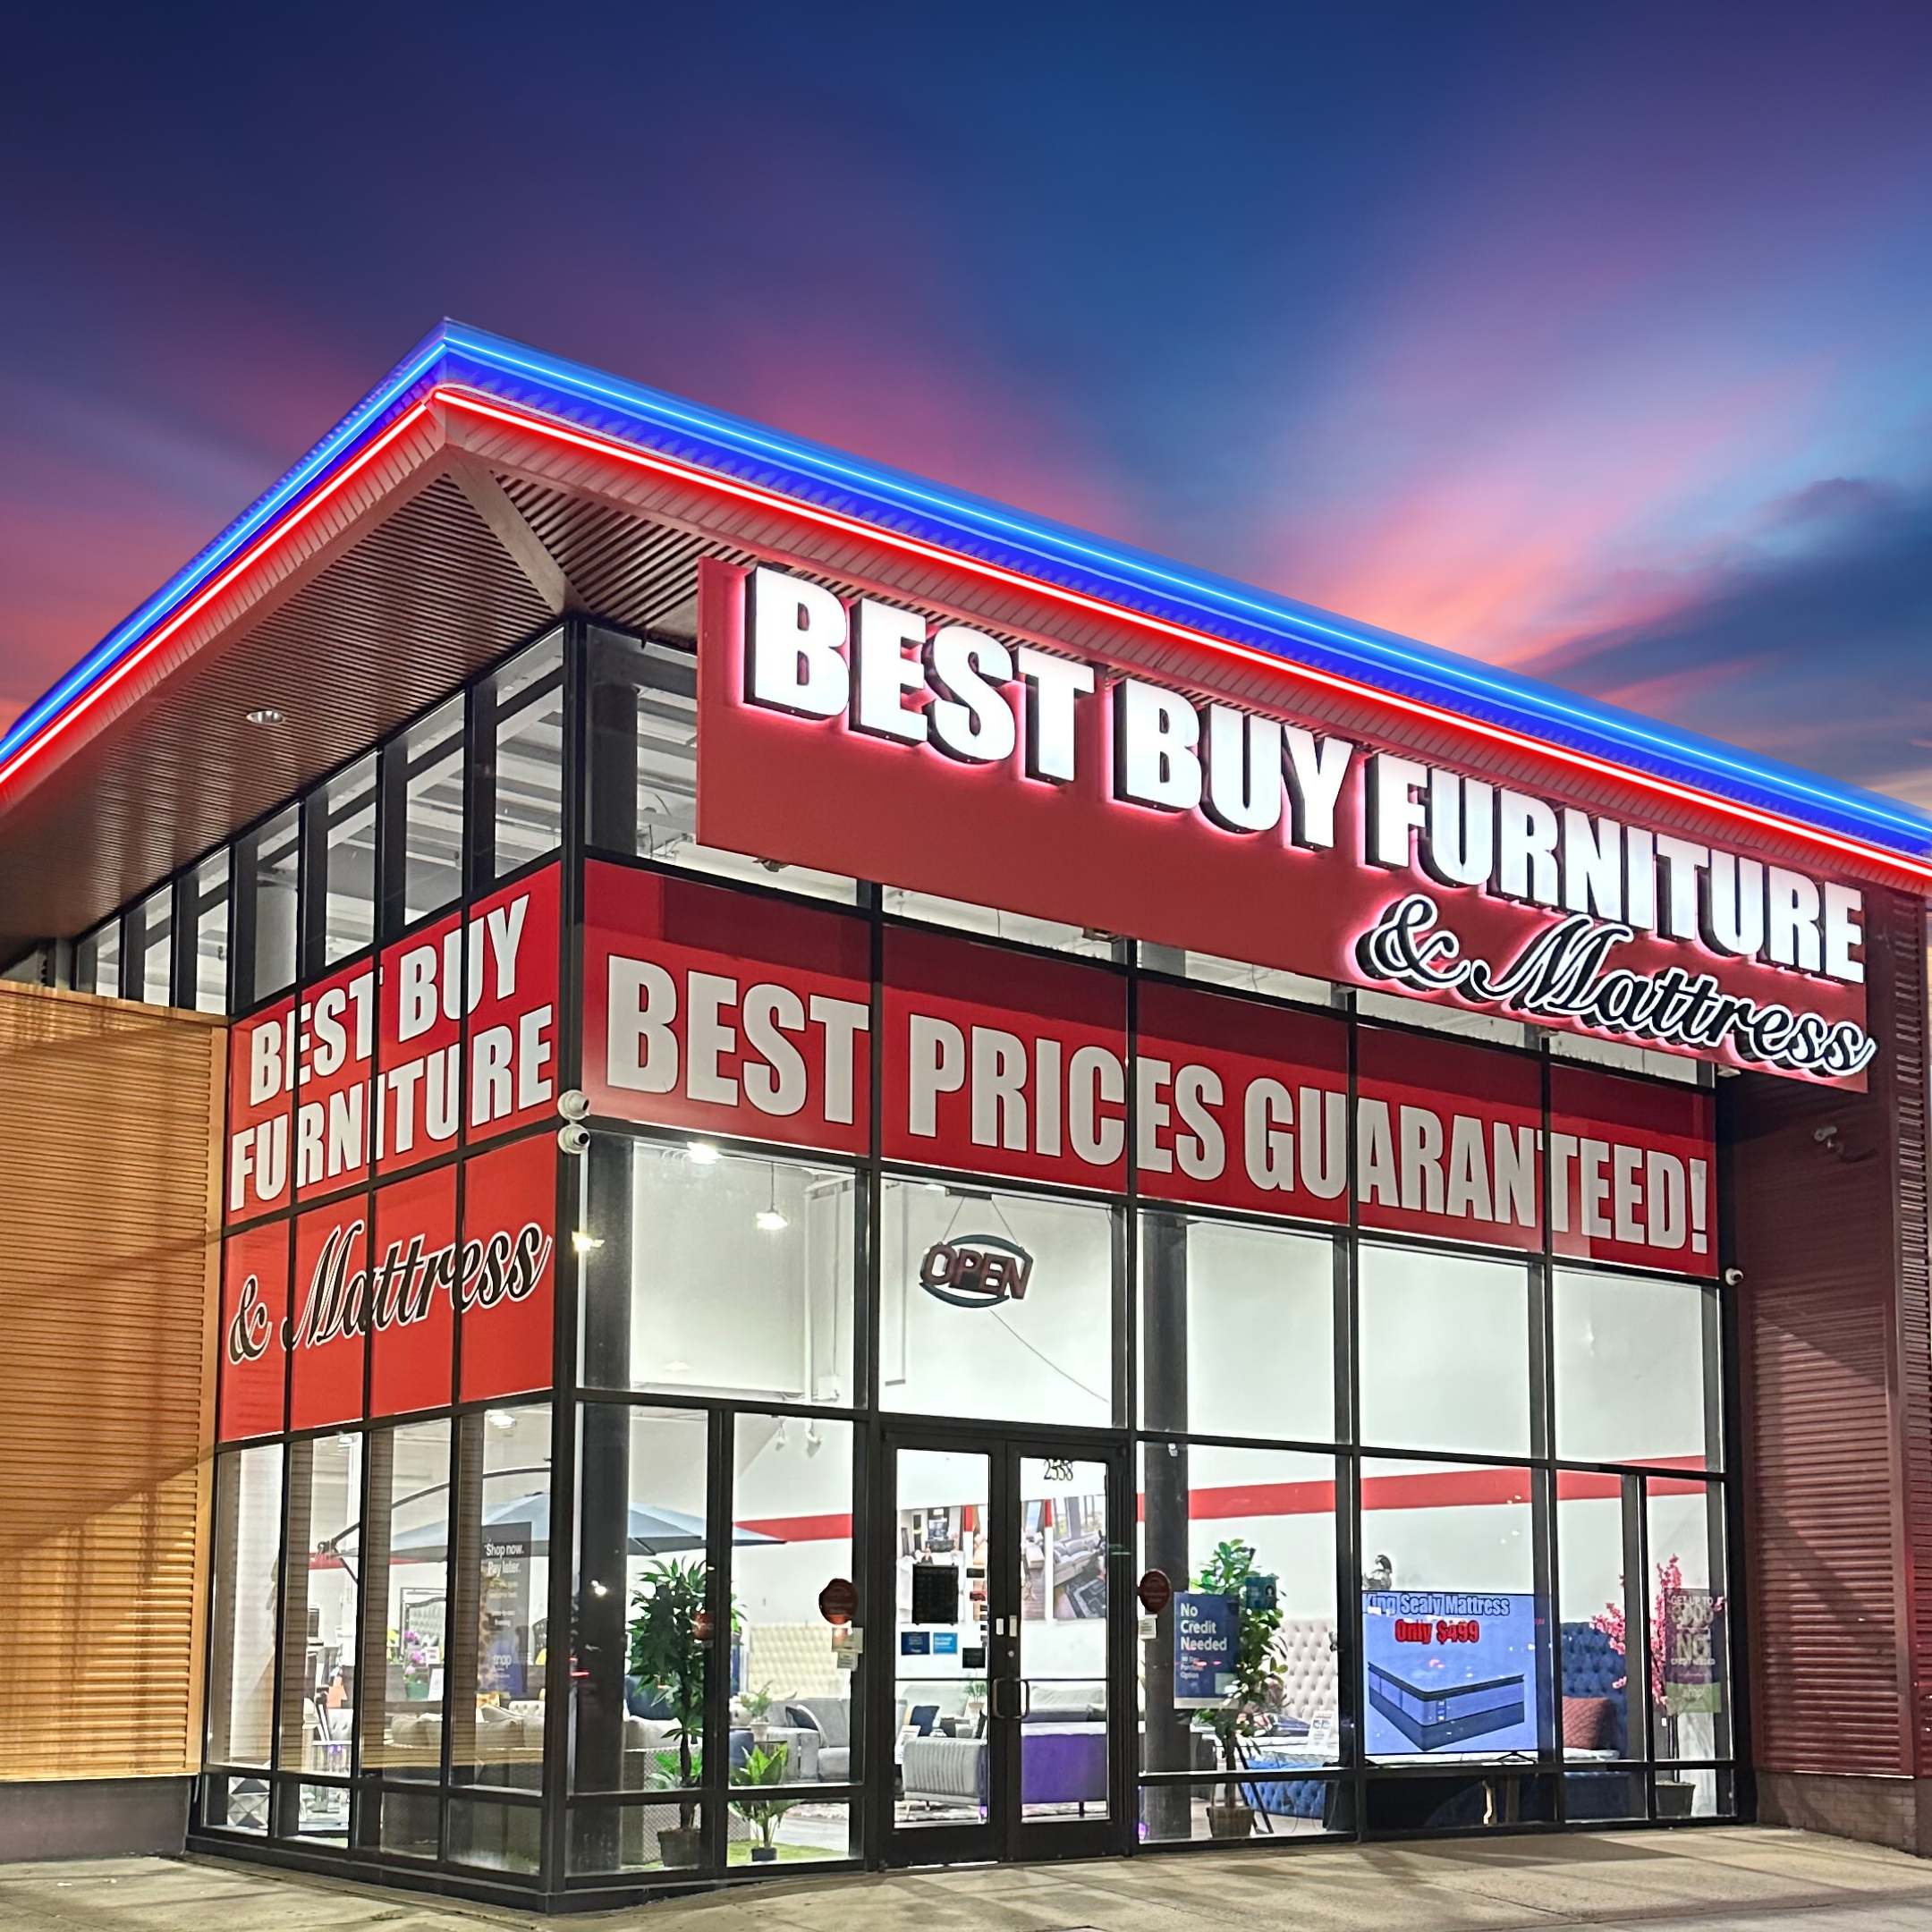 Best buy furniture & mattress store front